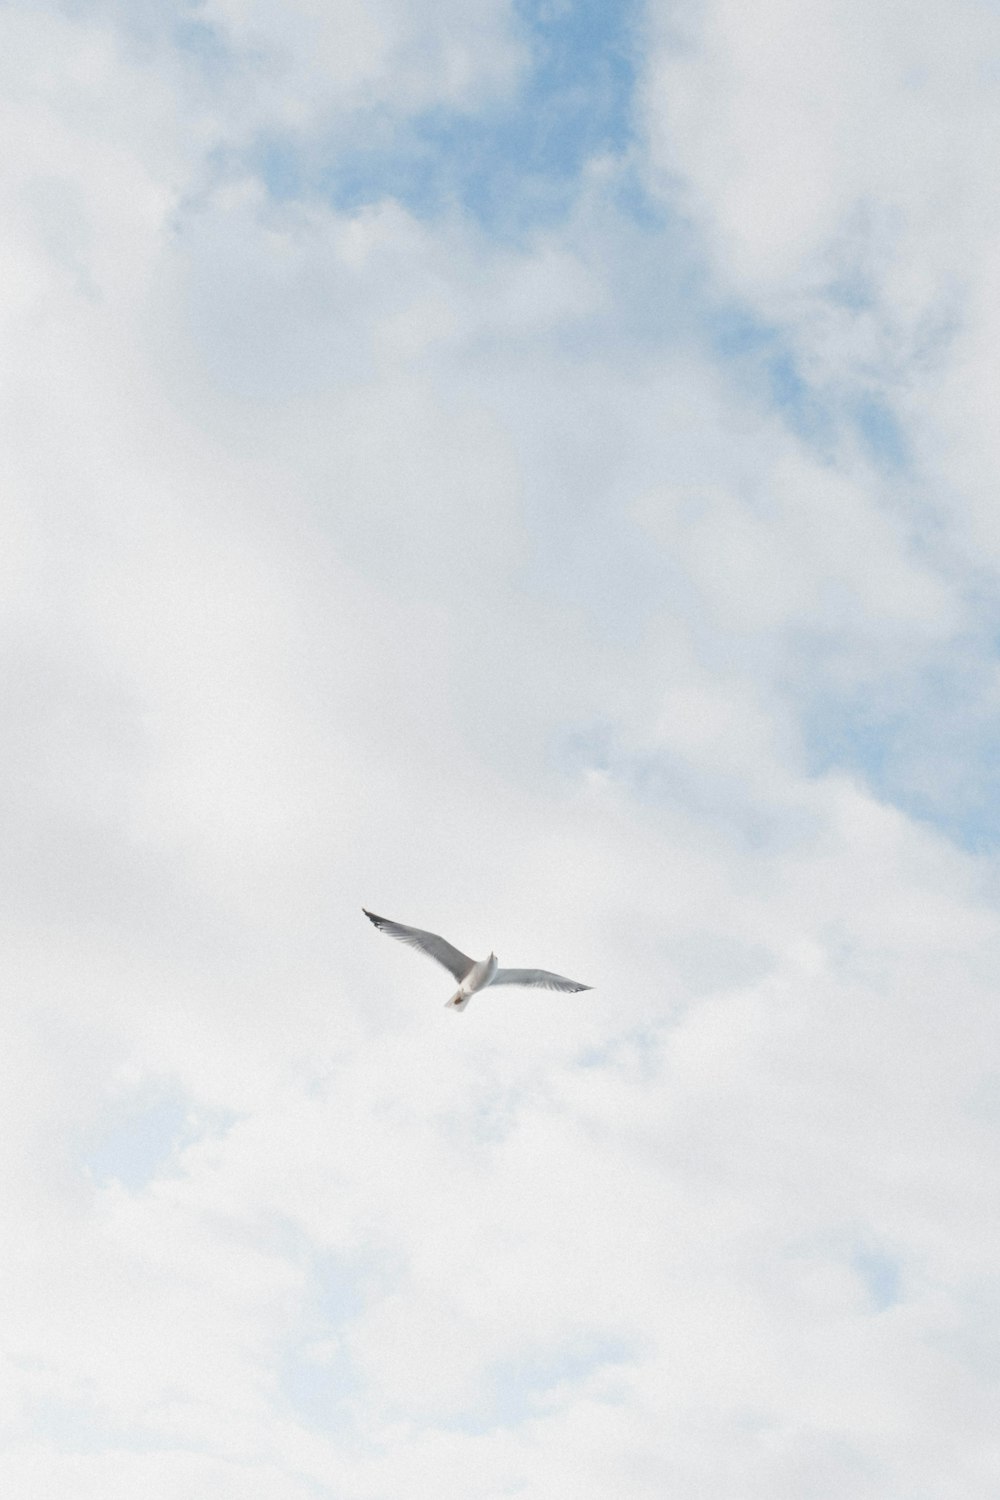 a white bird flying through a cloudy blue sky